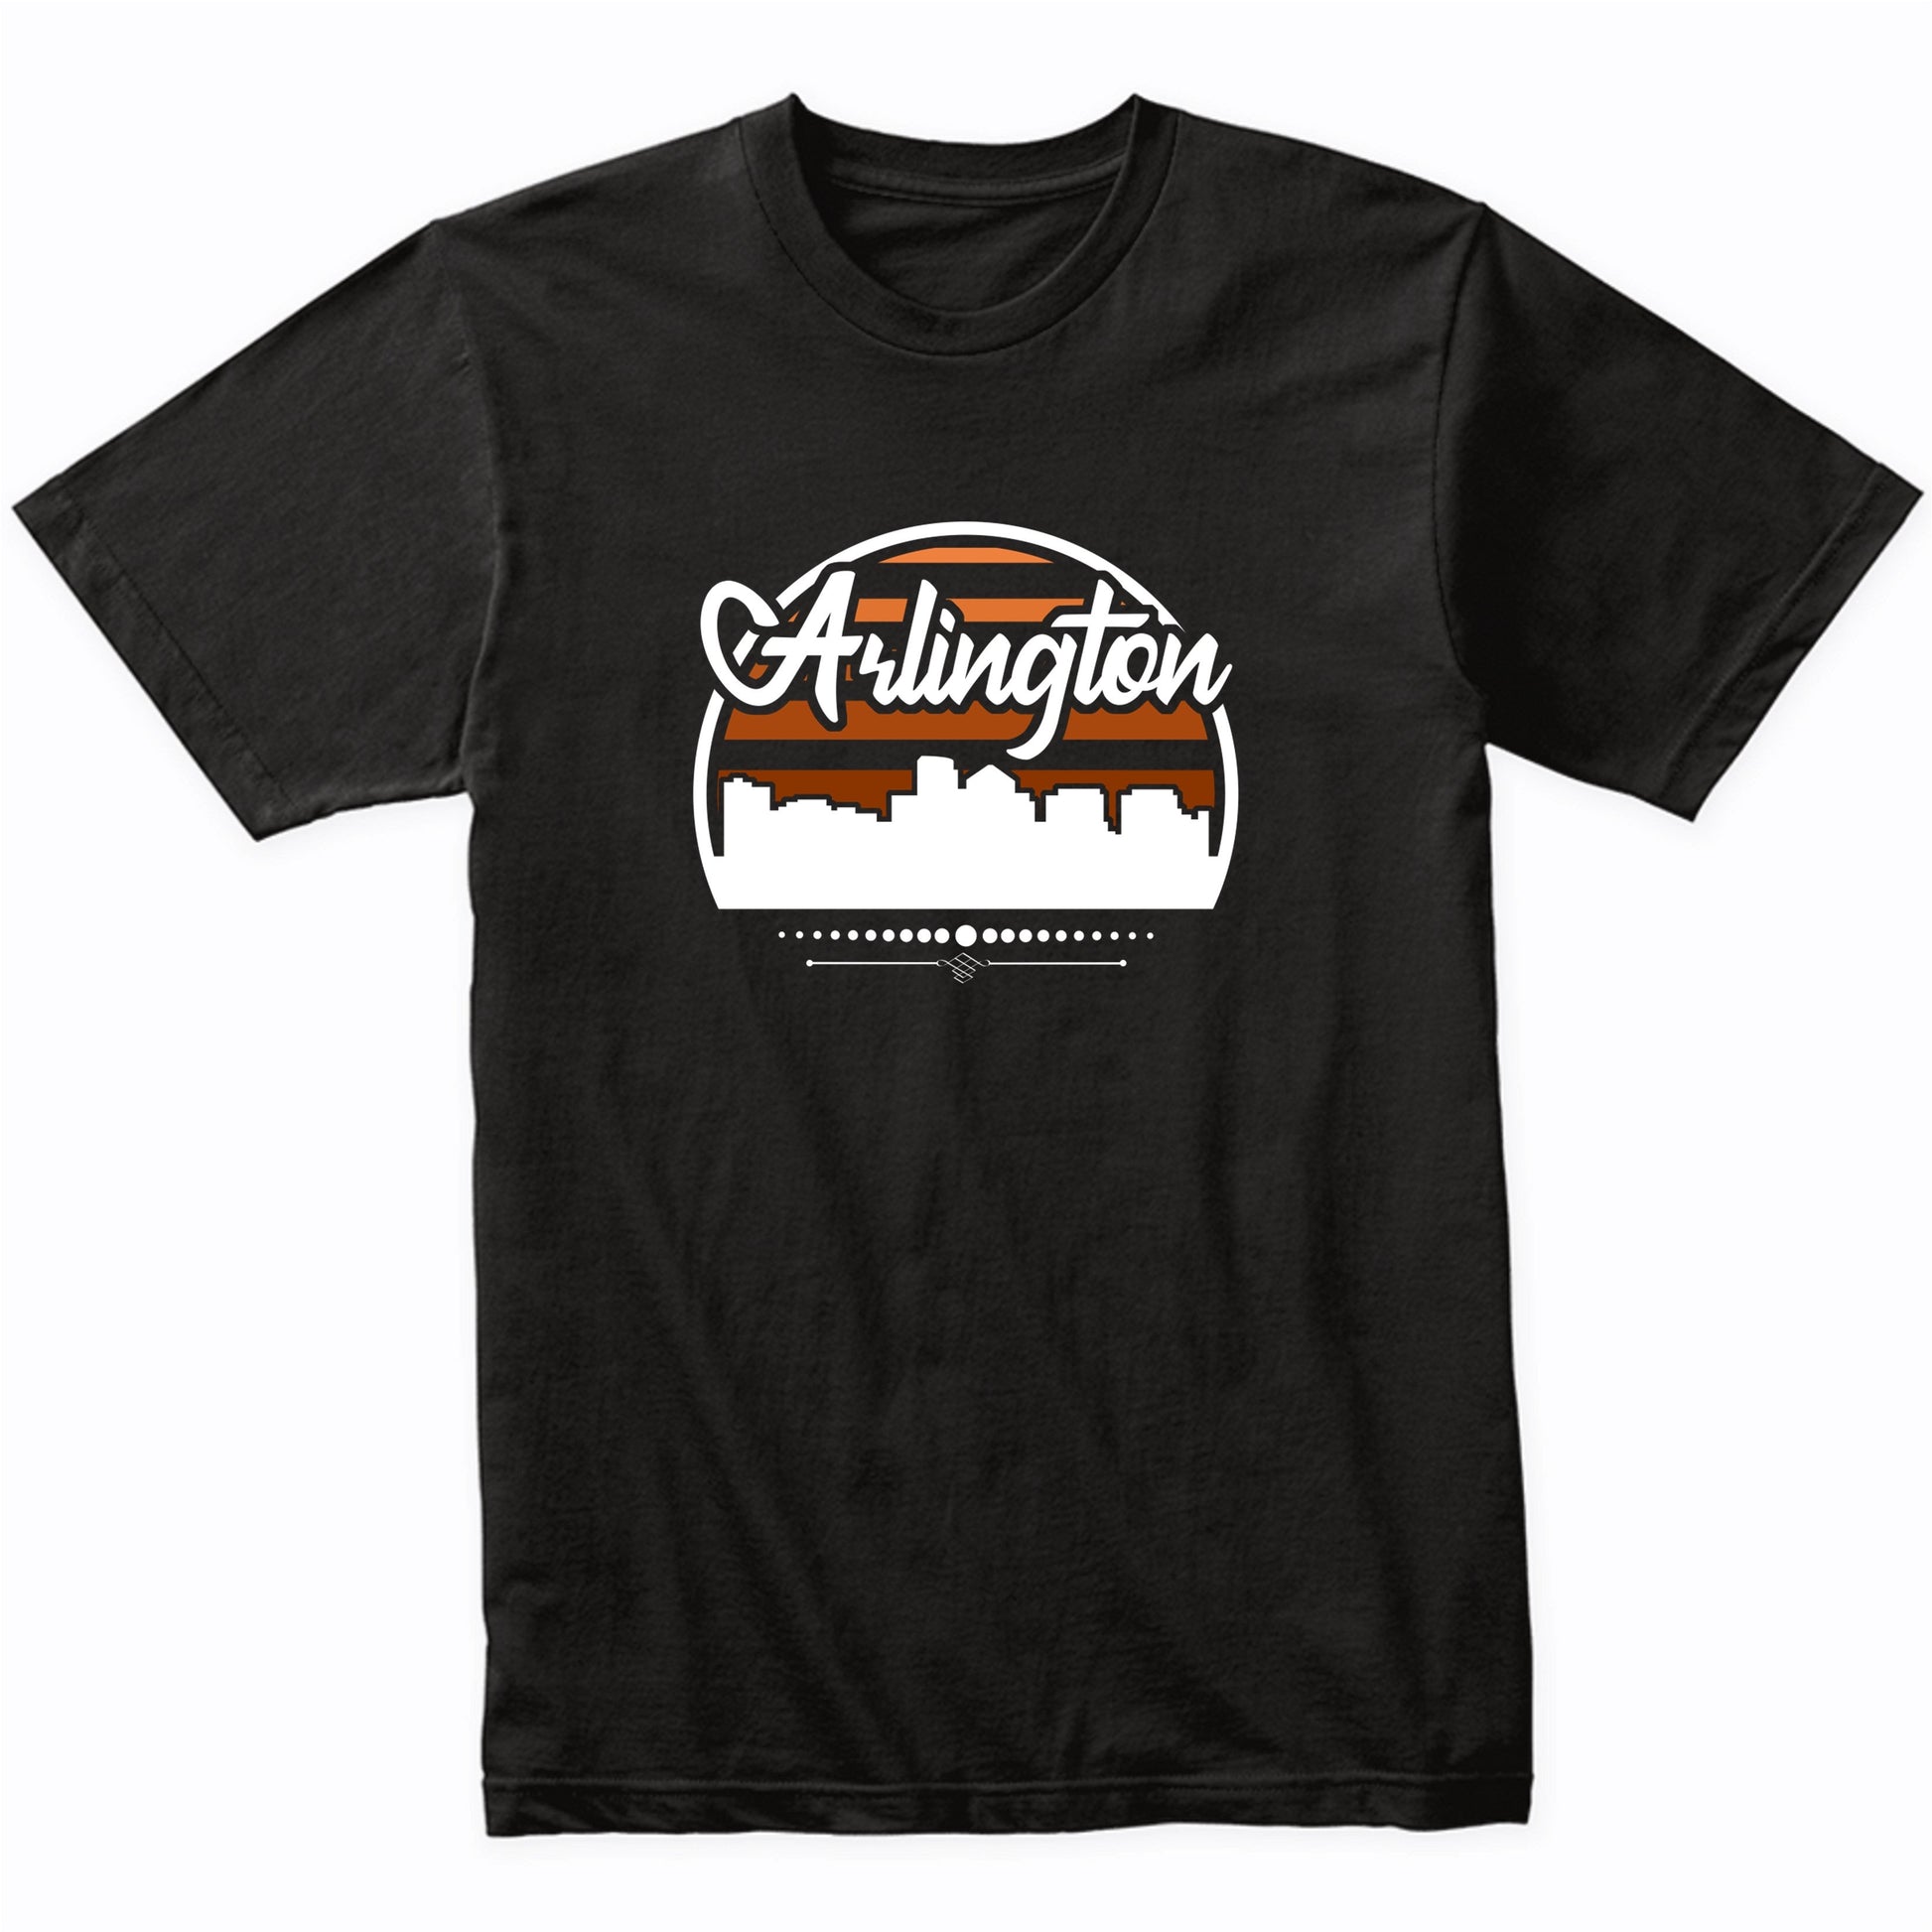 Retro Arlington Virginia Sunset Skyline T-Shirt